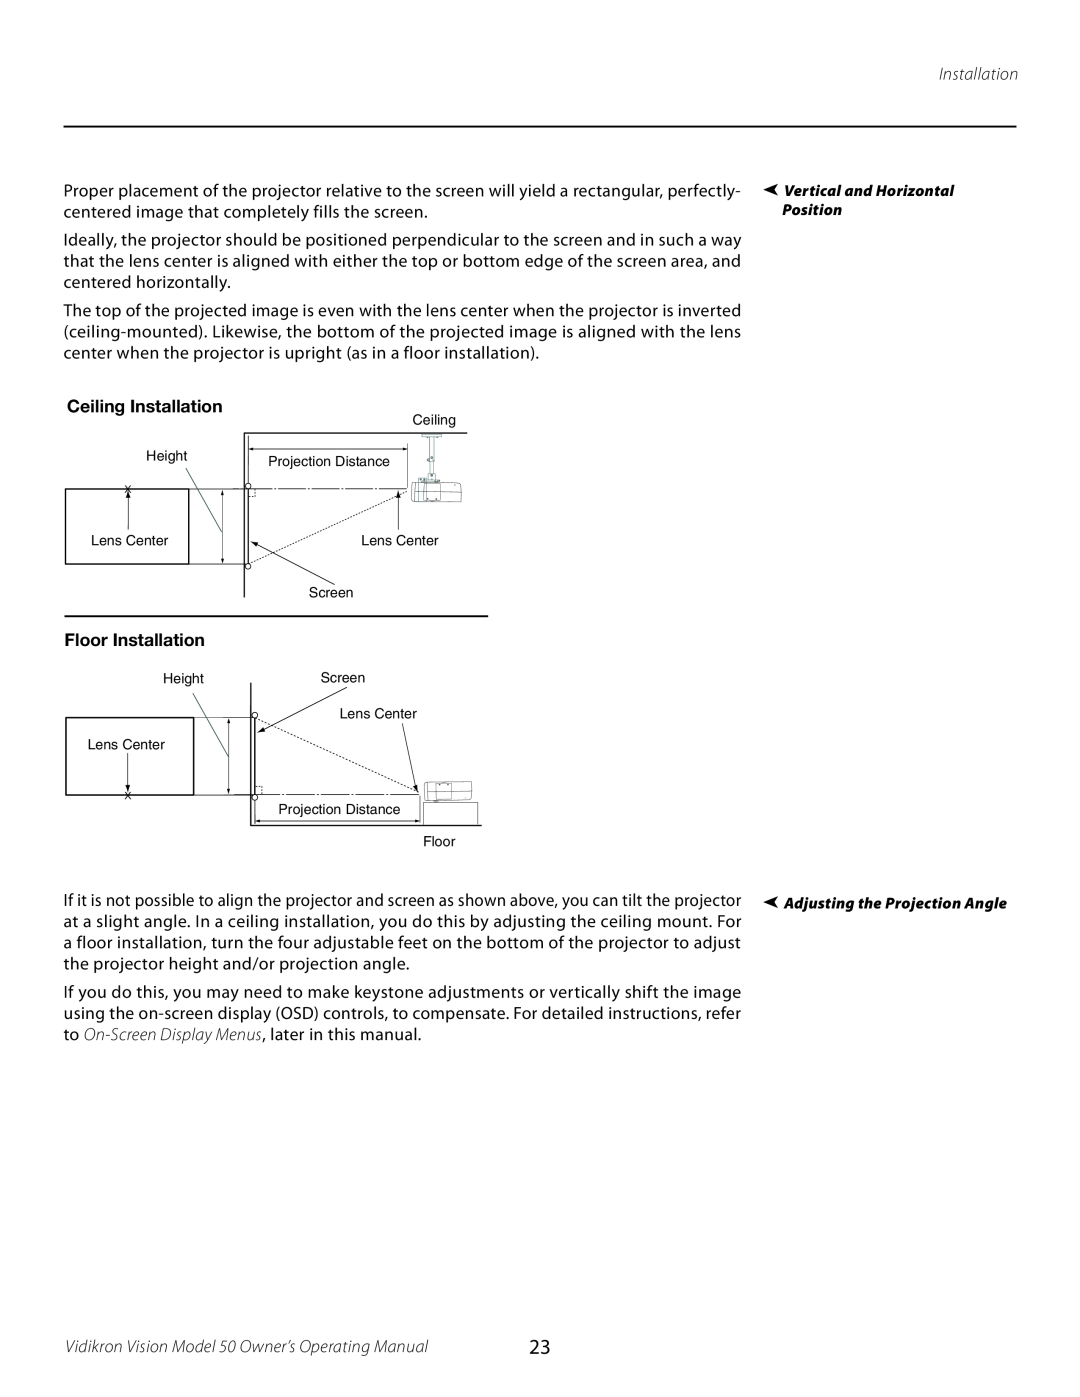 Vidikron manual Ceiling Installation, Floor Installation, Vidikron Vision Model 50 Owner’s Operating Manual 